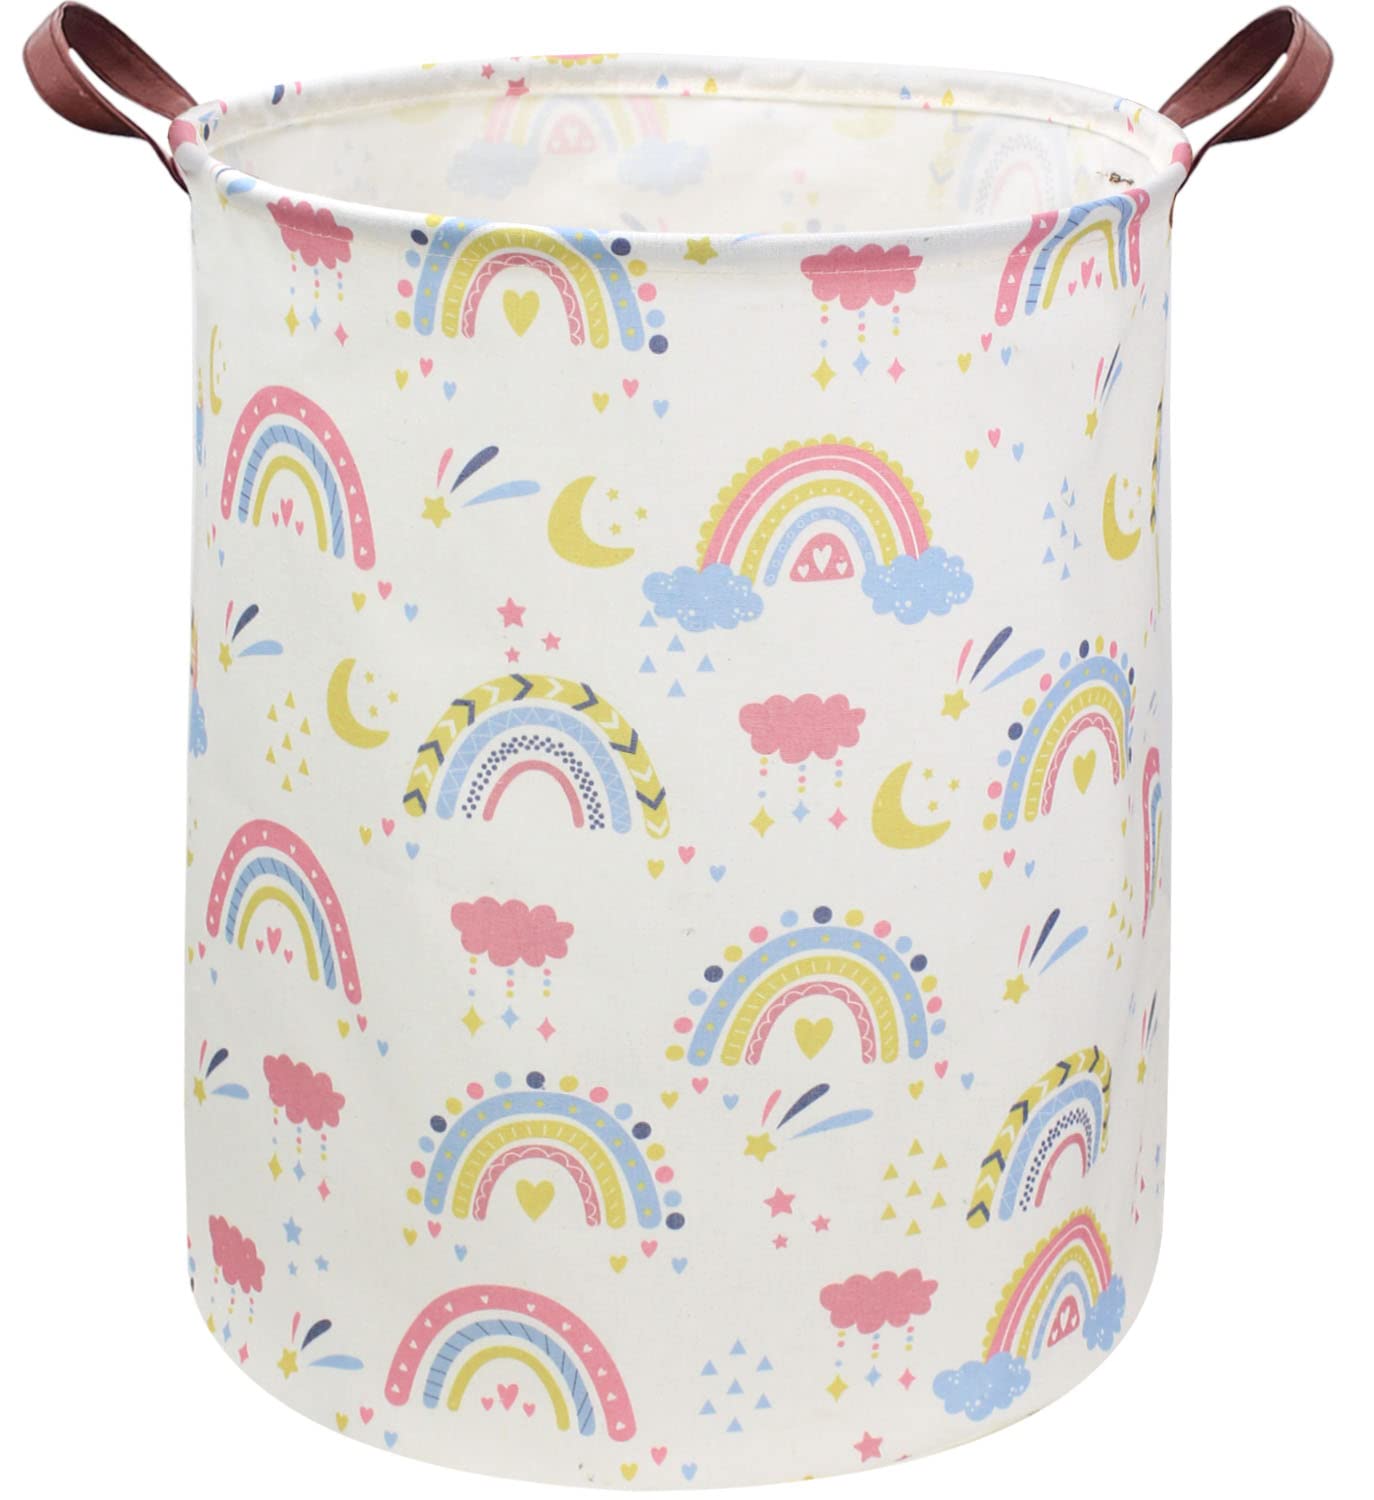 Essme Rainbow laundry basket,Collapsible Kids Laundry Hamper with Waterproof PE Coating,Girls Hamper Nursery Hamper for Girls Ro